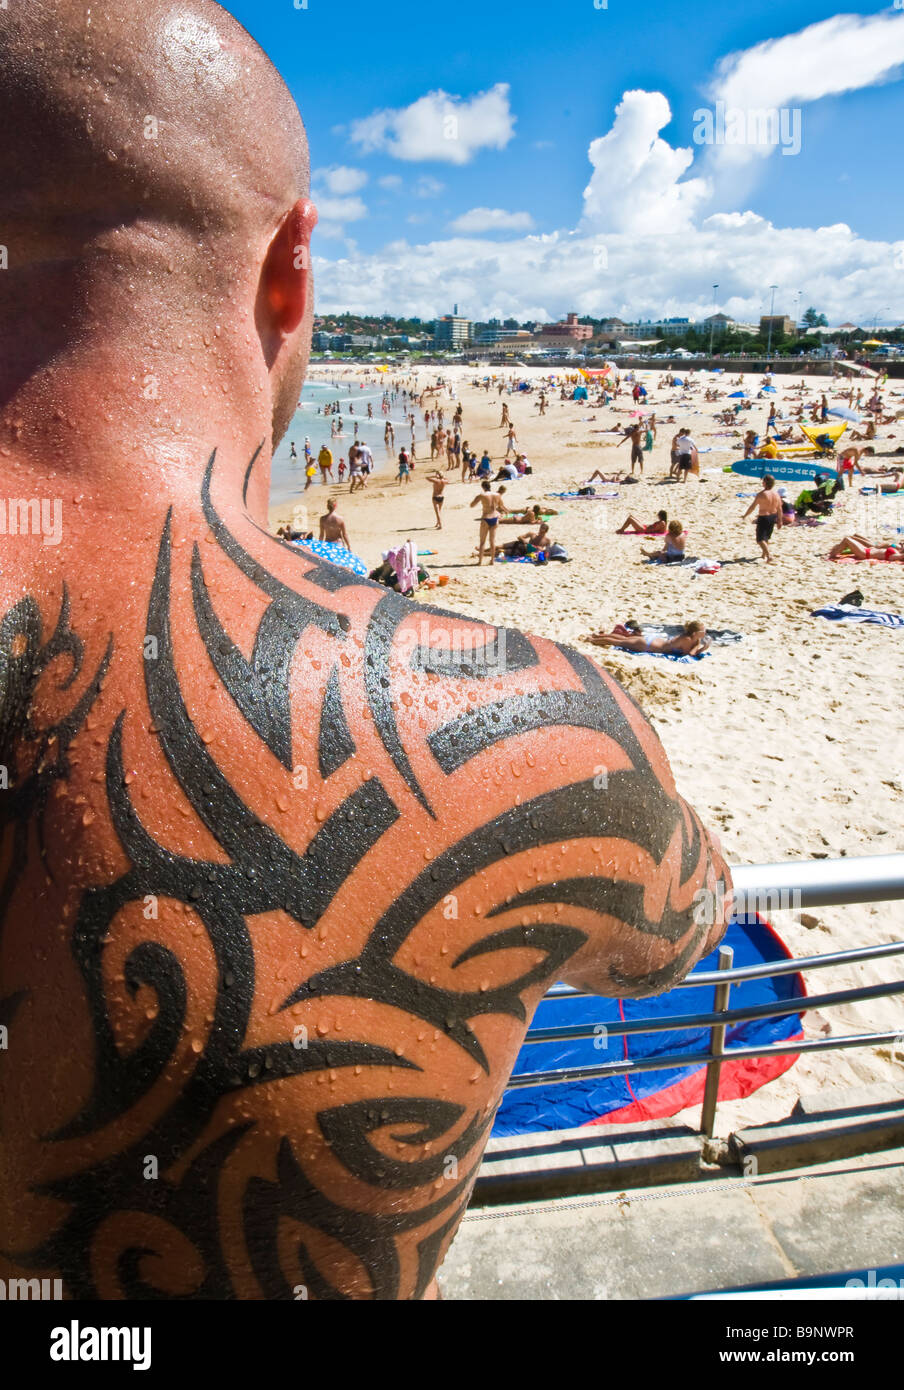 Tattooed beefcake guards his turf on a Summer day at Bondi Beach Australia as a packed beach soaks up the sun. Stock Photo